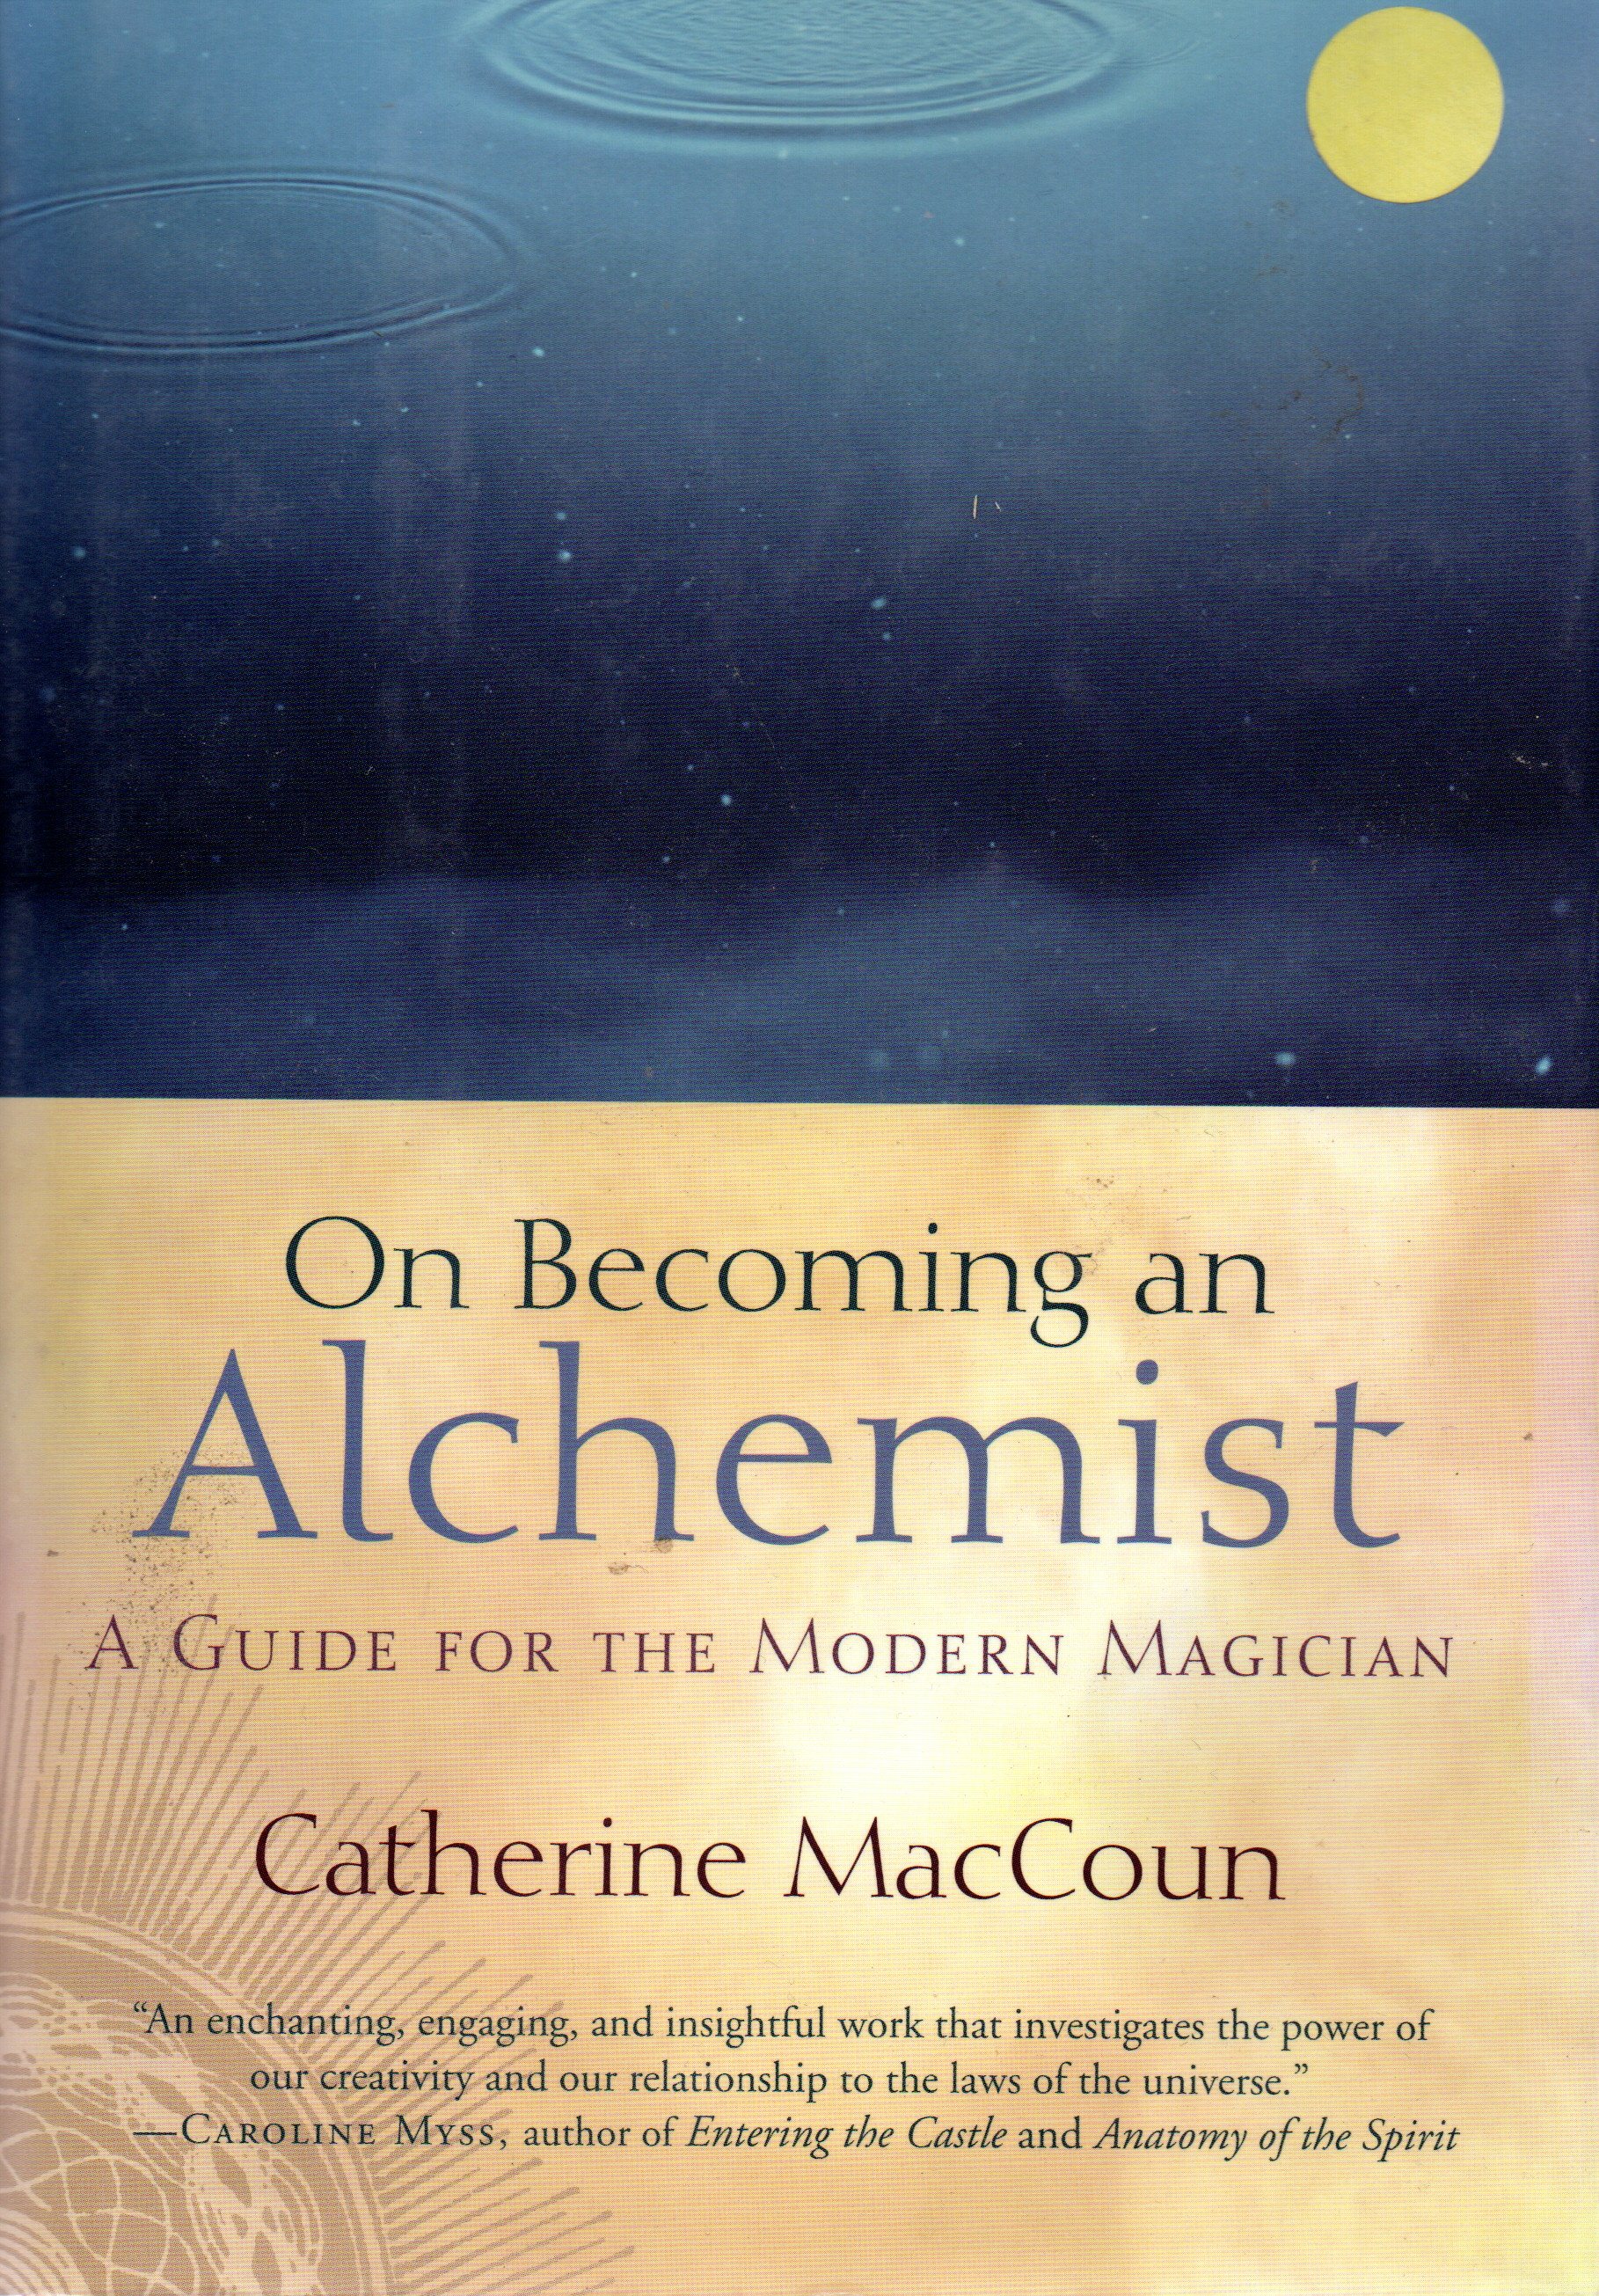 on becoming an alchemist by catherine maccoun